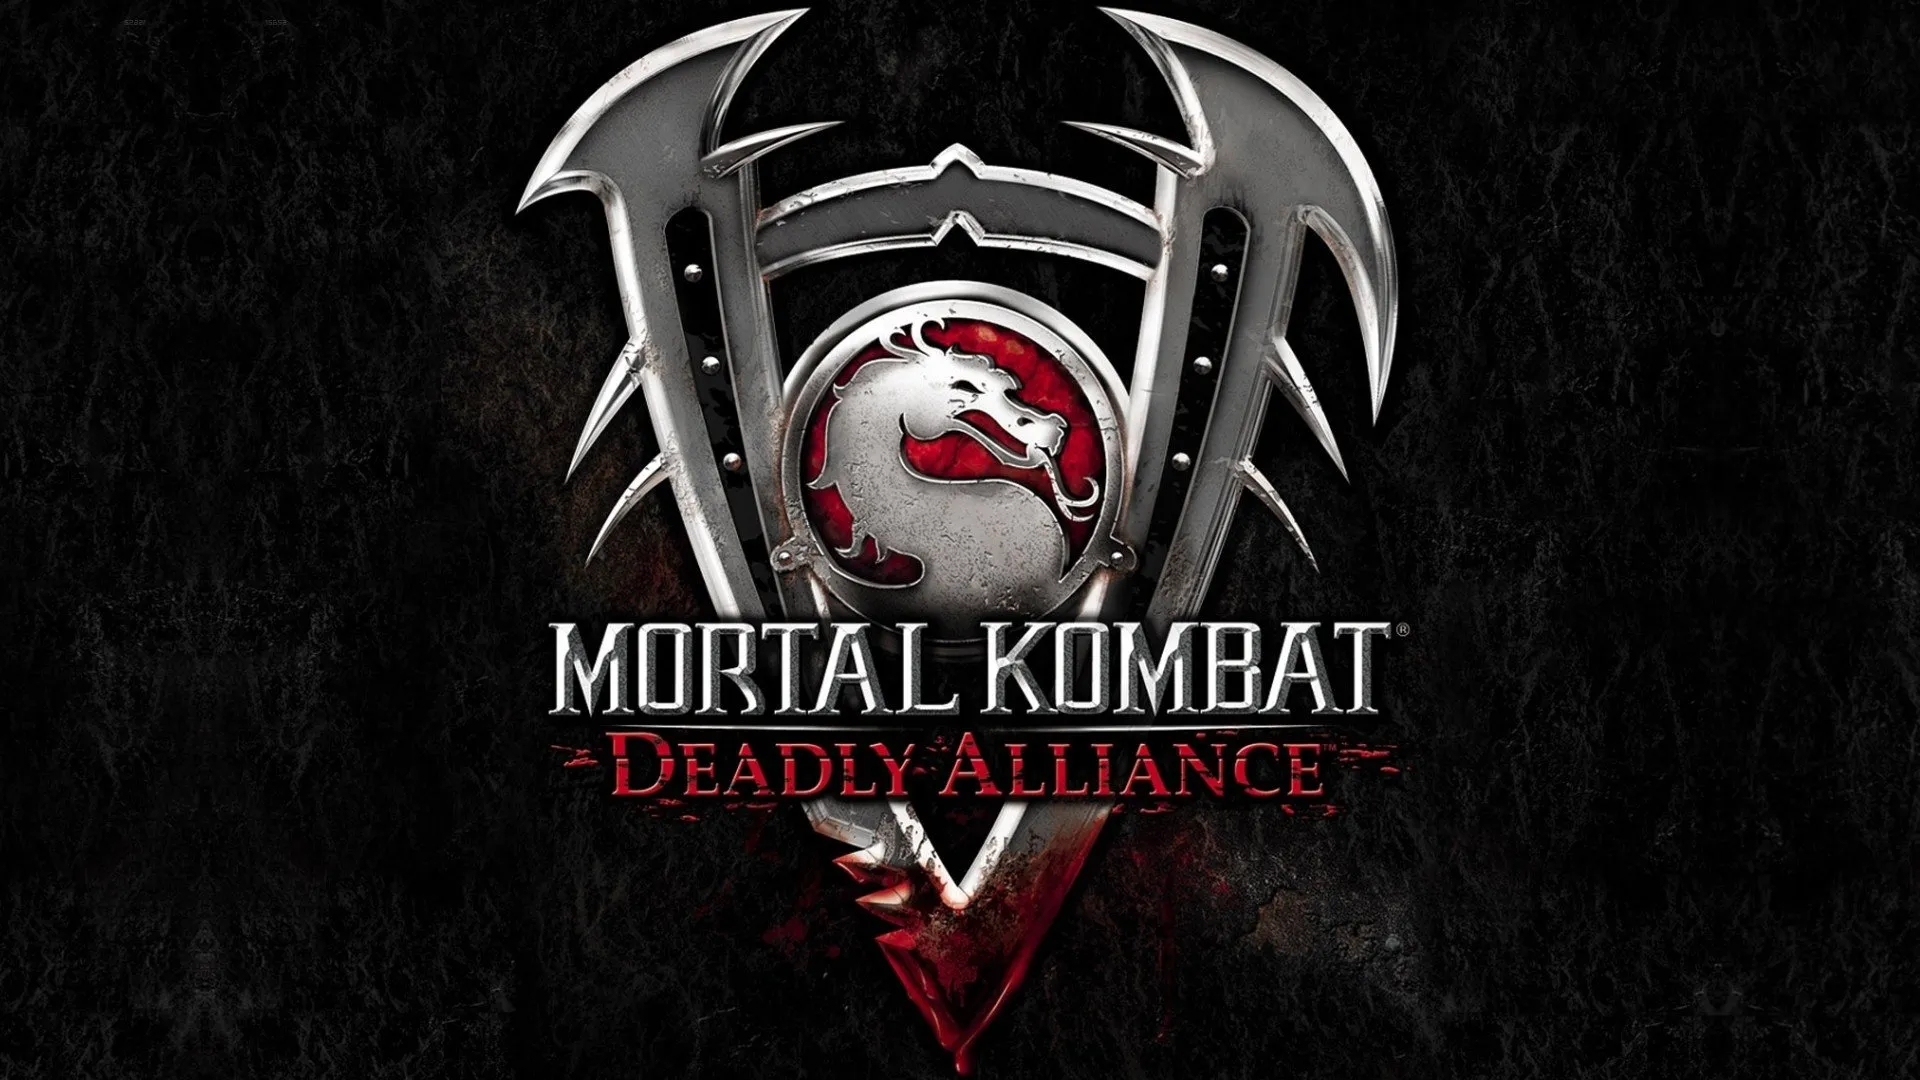 mortal-kombat-deadly-alliance